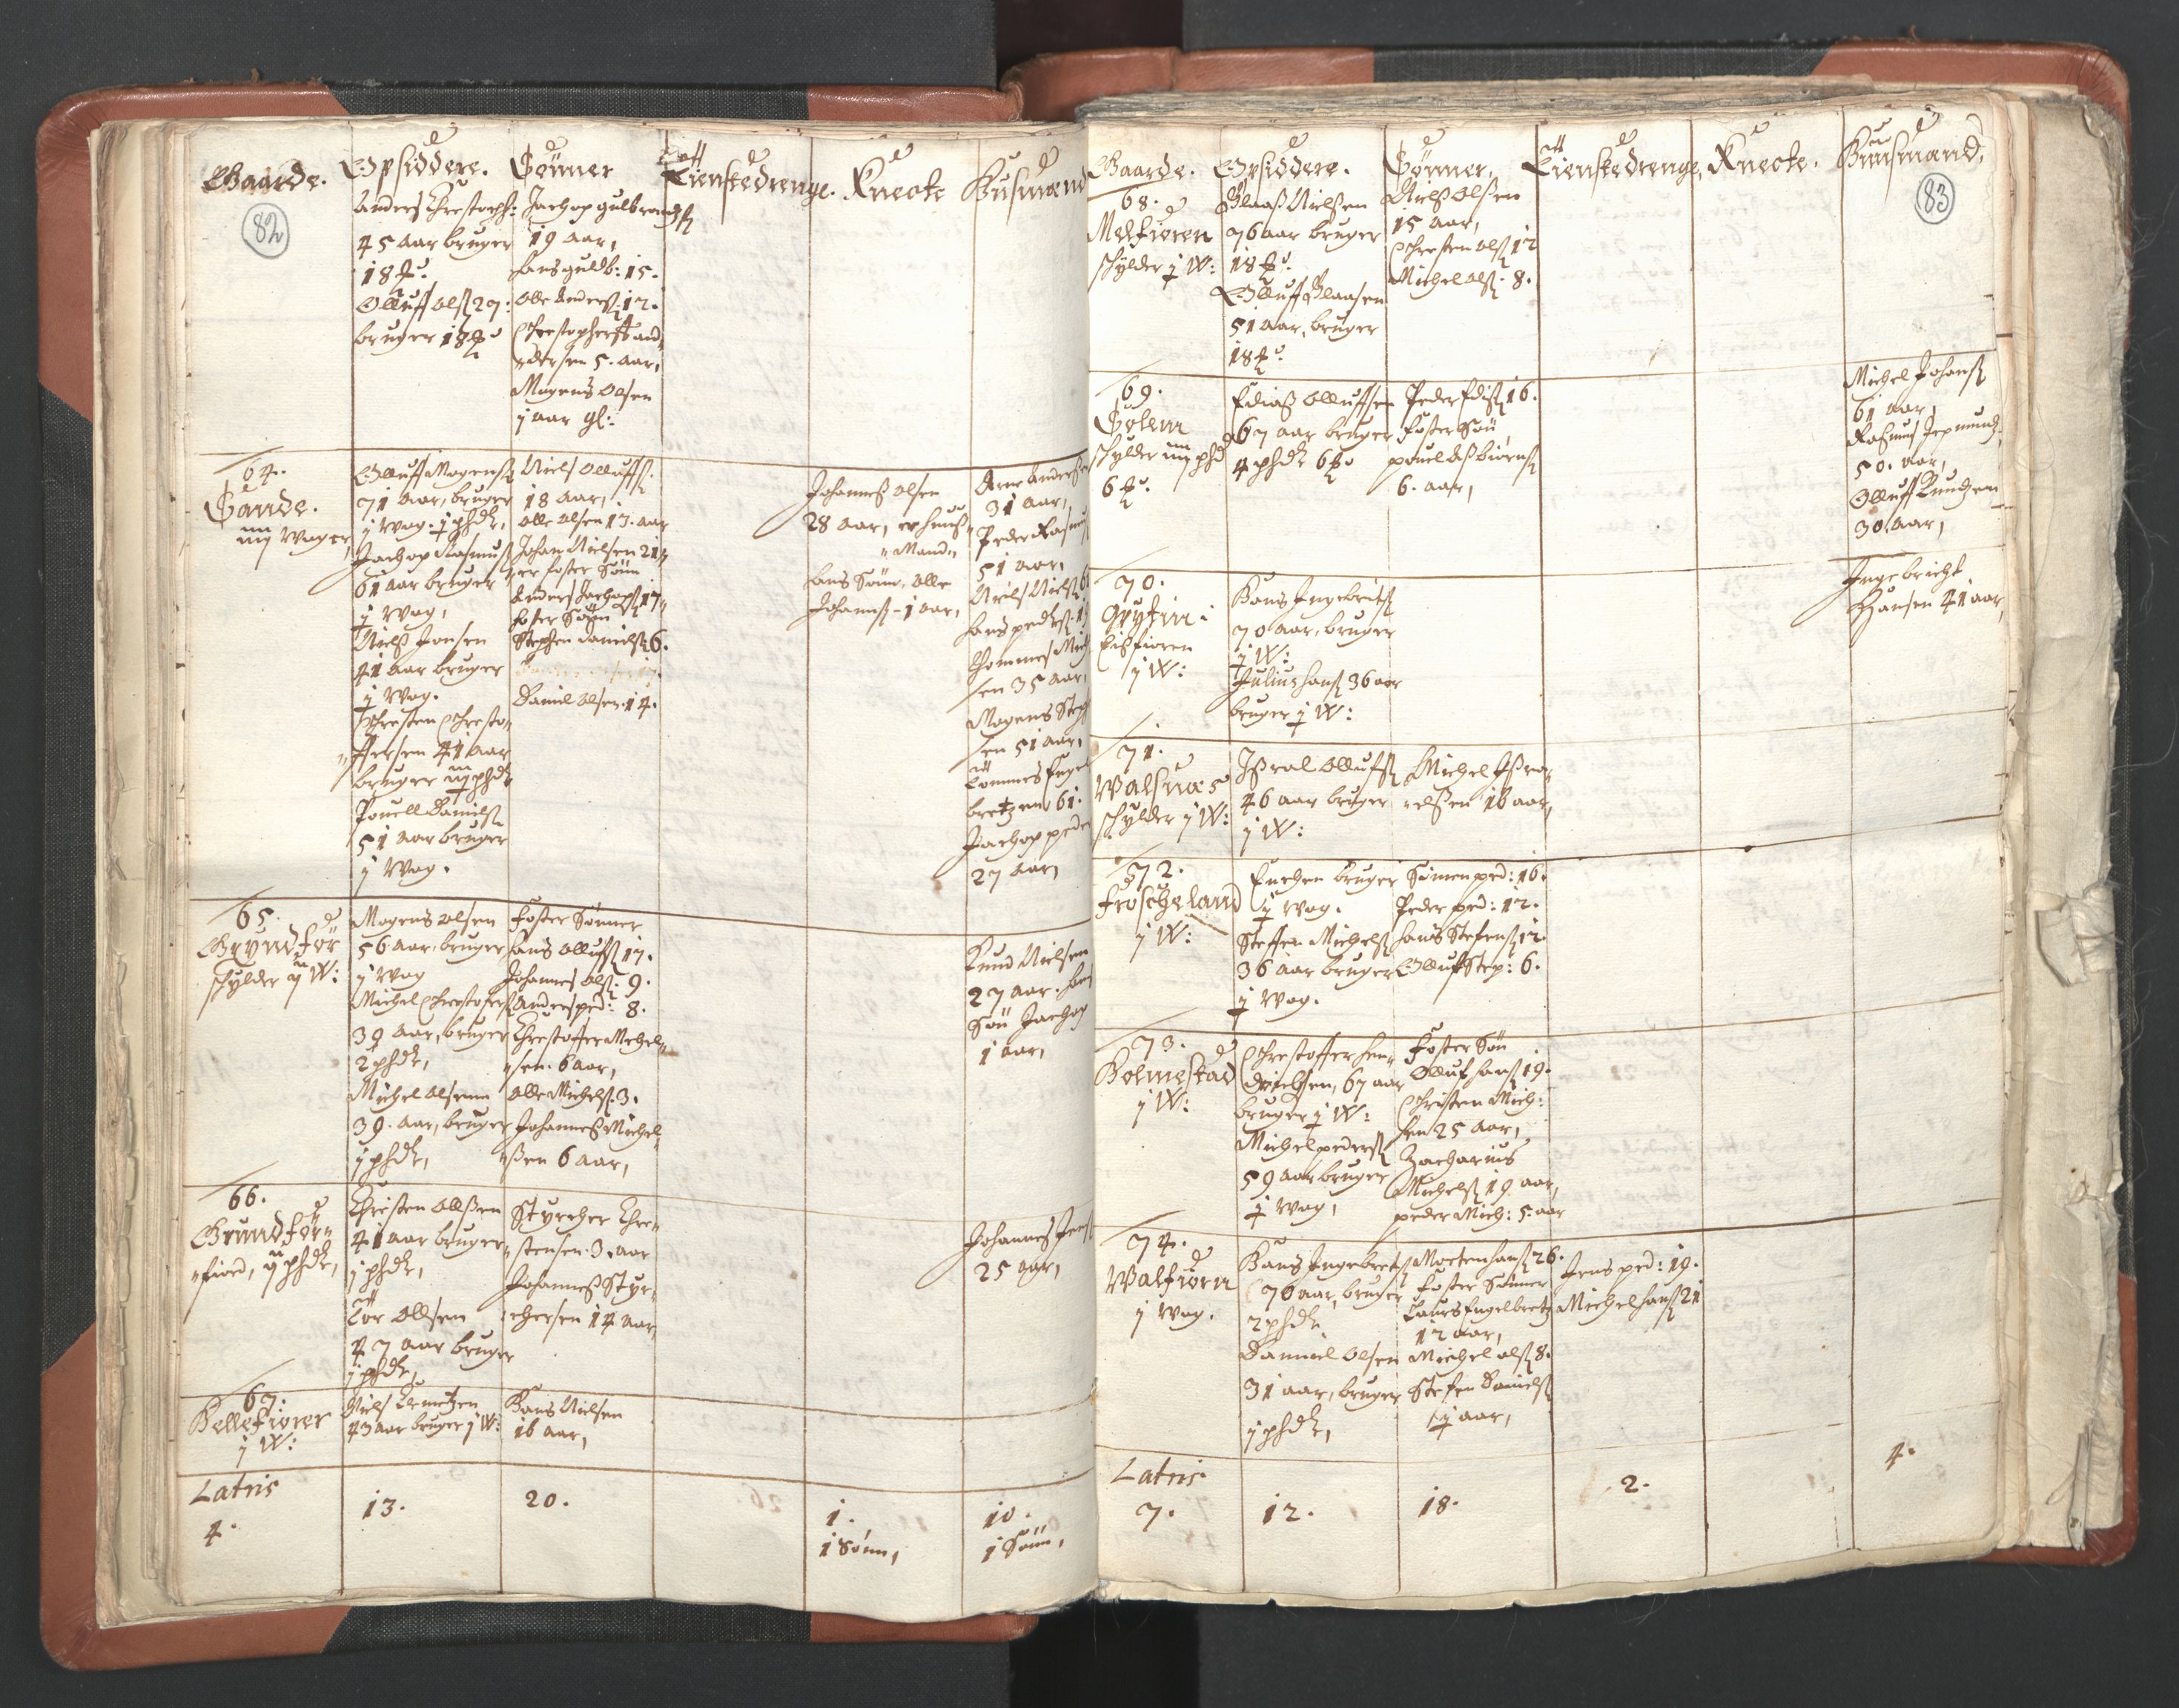 RA, Vicar's Census 1664-1666, no. 36: Lofoten and Vesterålen deanery, Senja deanery and Troms deanery, 1664-1666, p. 82-83